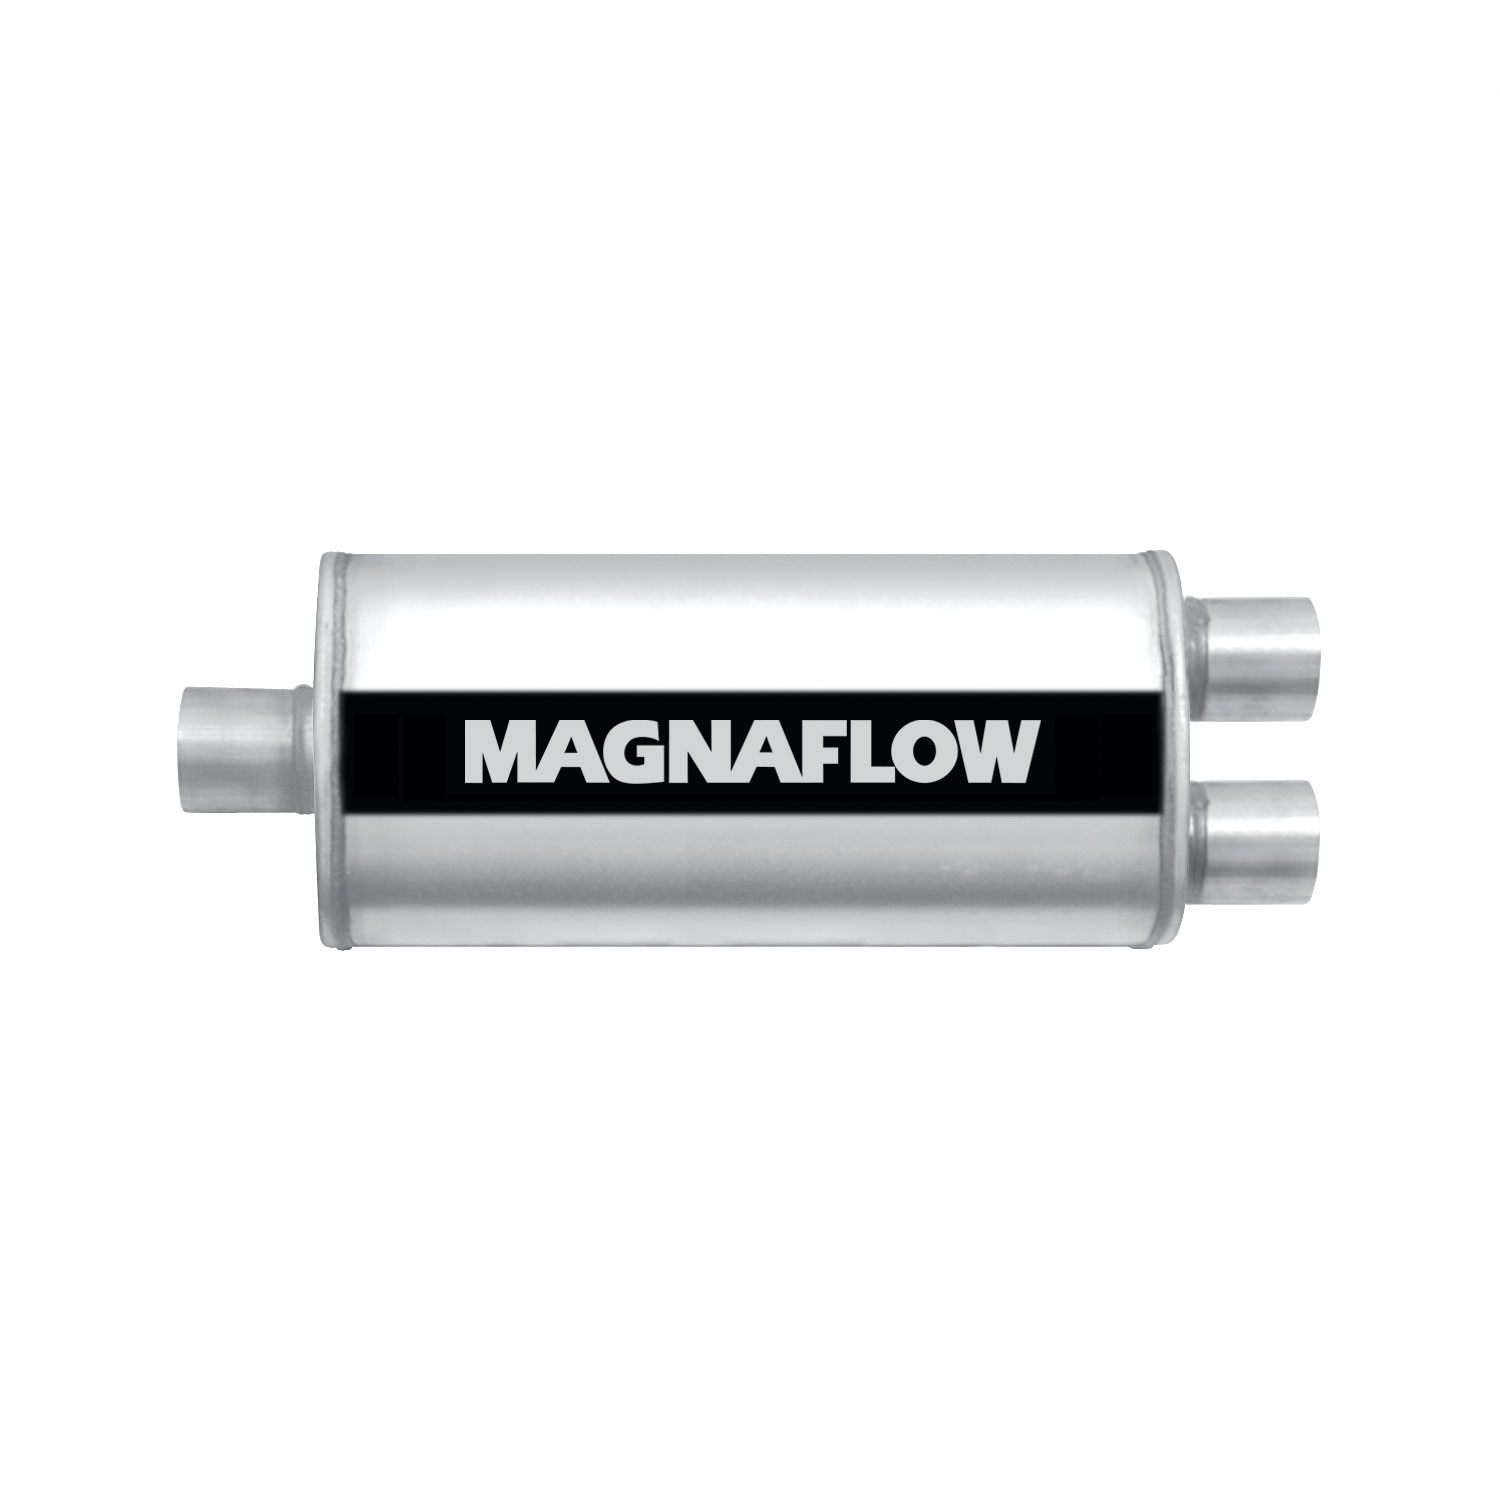 Magnaflow Performance Exhaust Magnaflow Performance Exhaust 12278 Stainless Steel Muffler